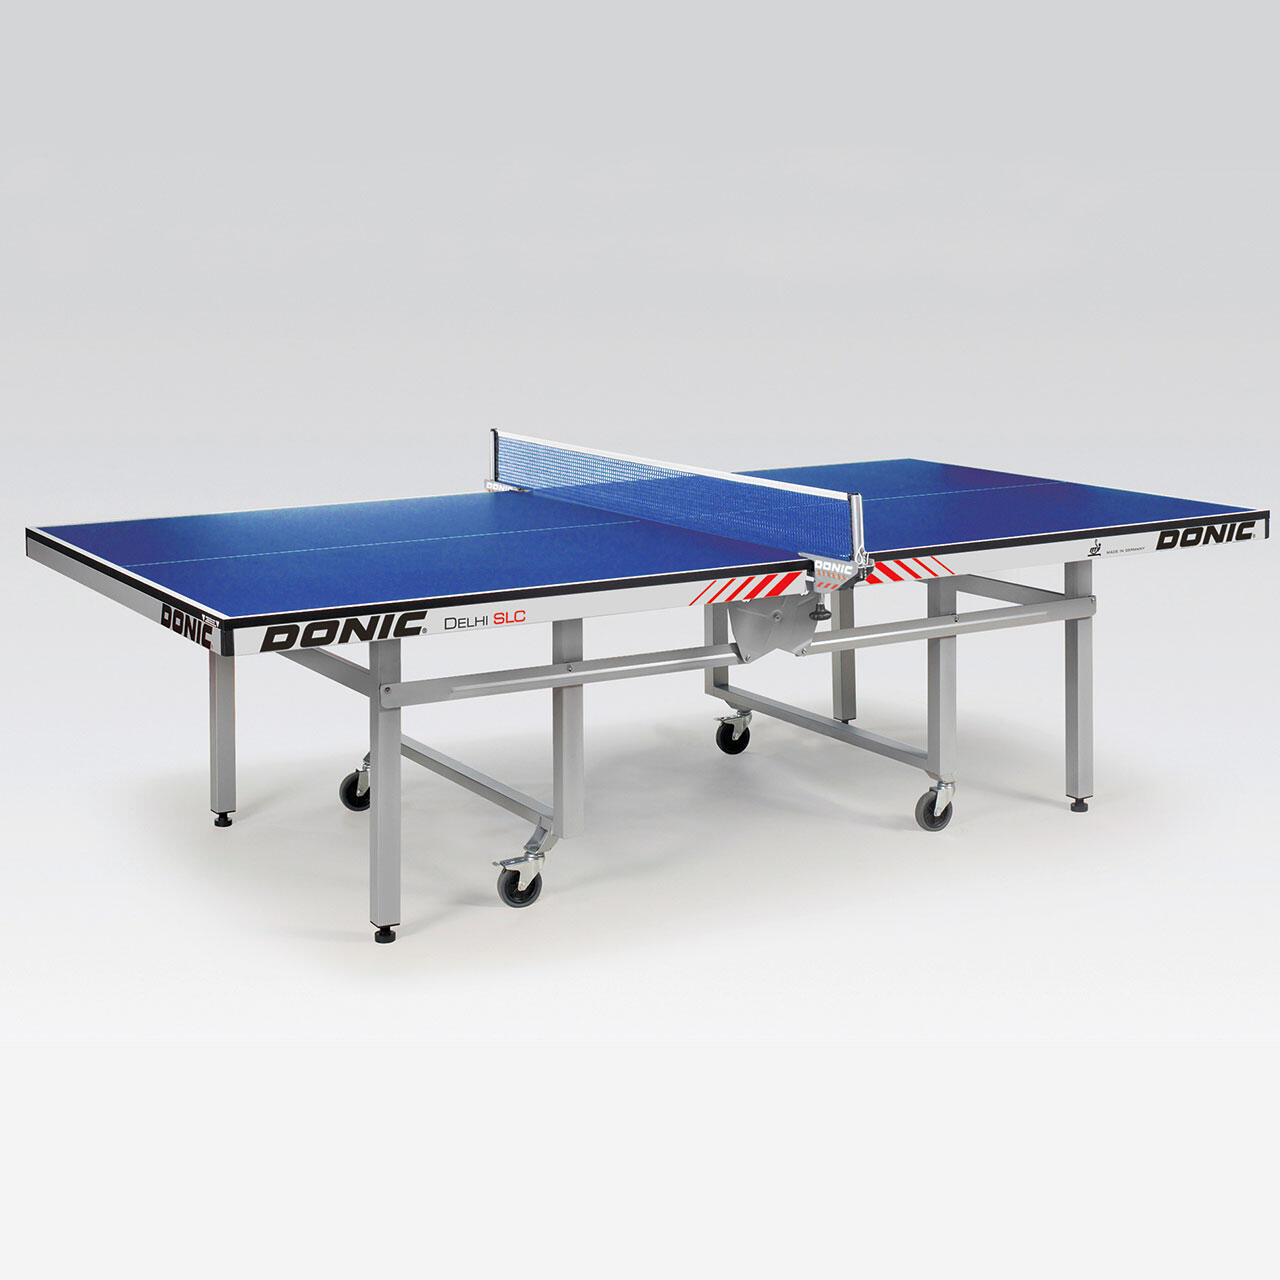 Donic Delhi SLC Blue Table Tennis Table 2/3